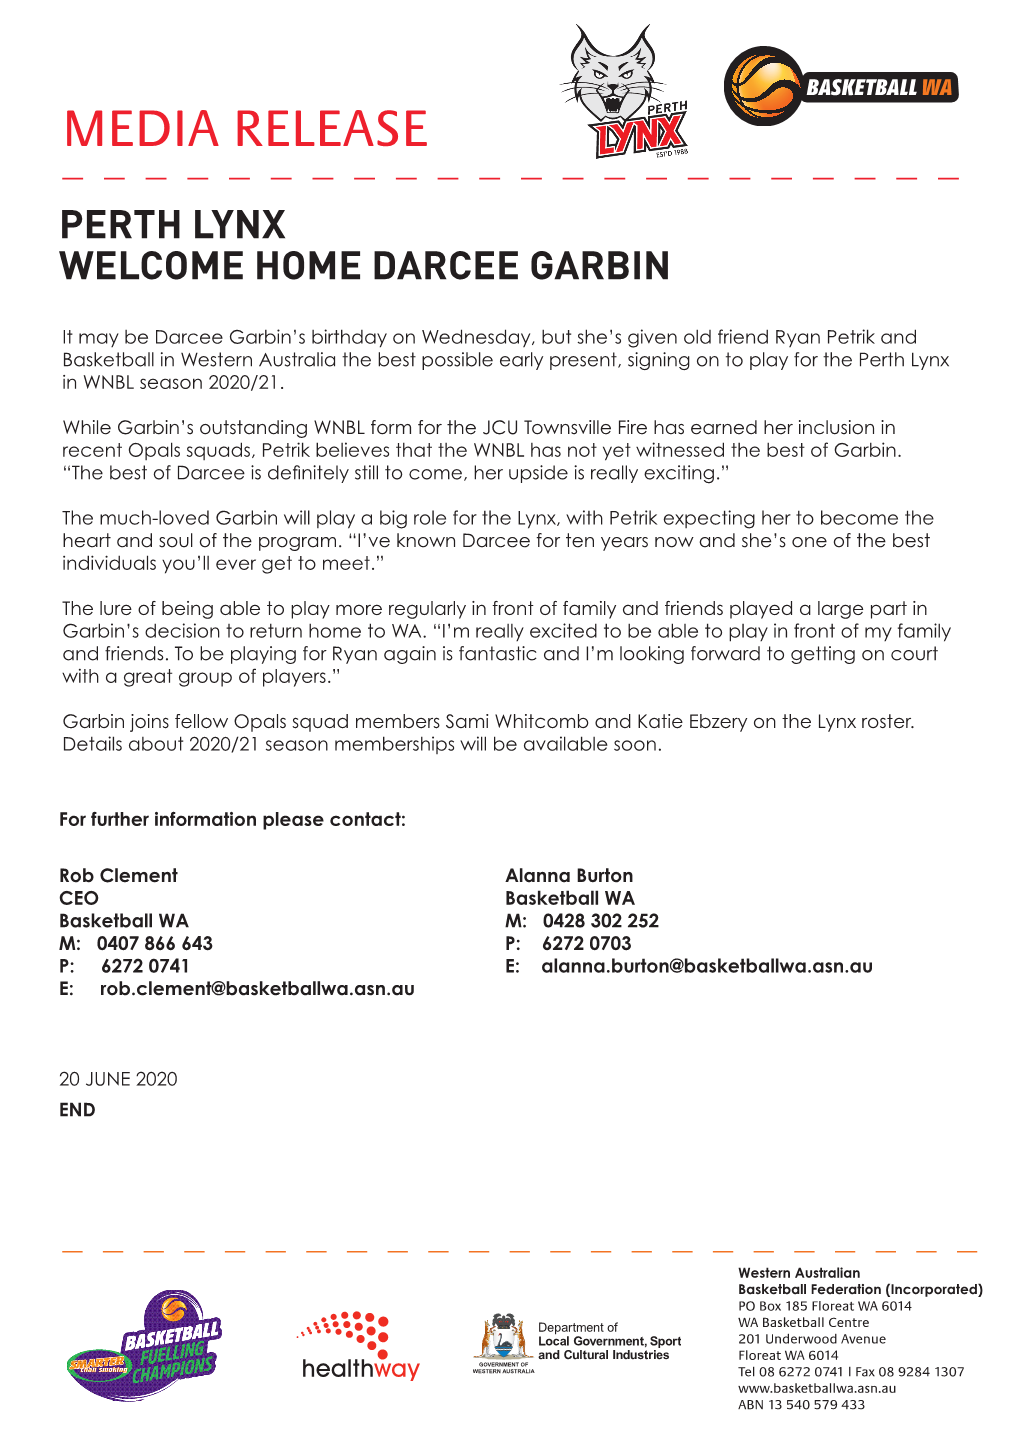 Media Release Perth Lynx Darcee Garbin